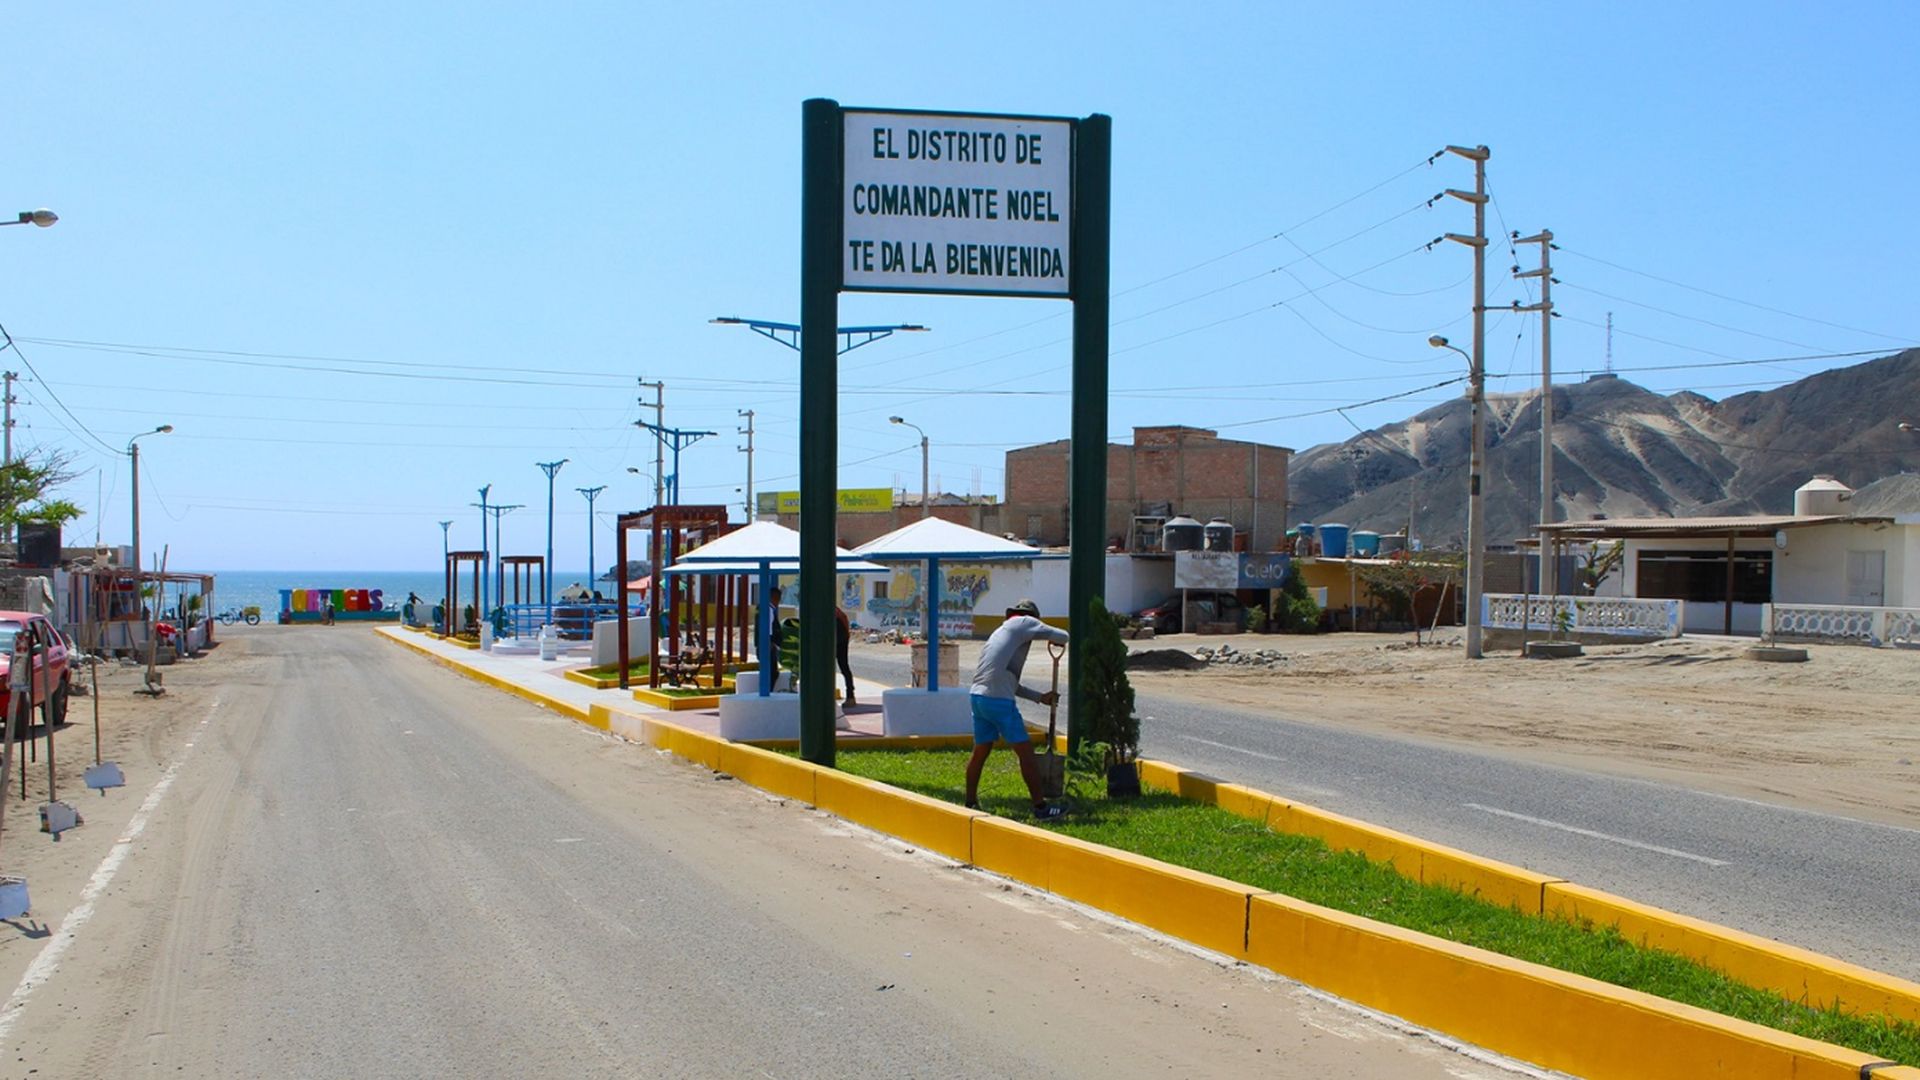 Today is the anniversary of Comandante Noel (District Municipality of Comandante Noel)